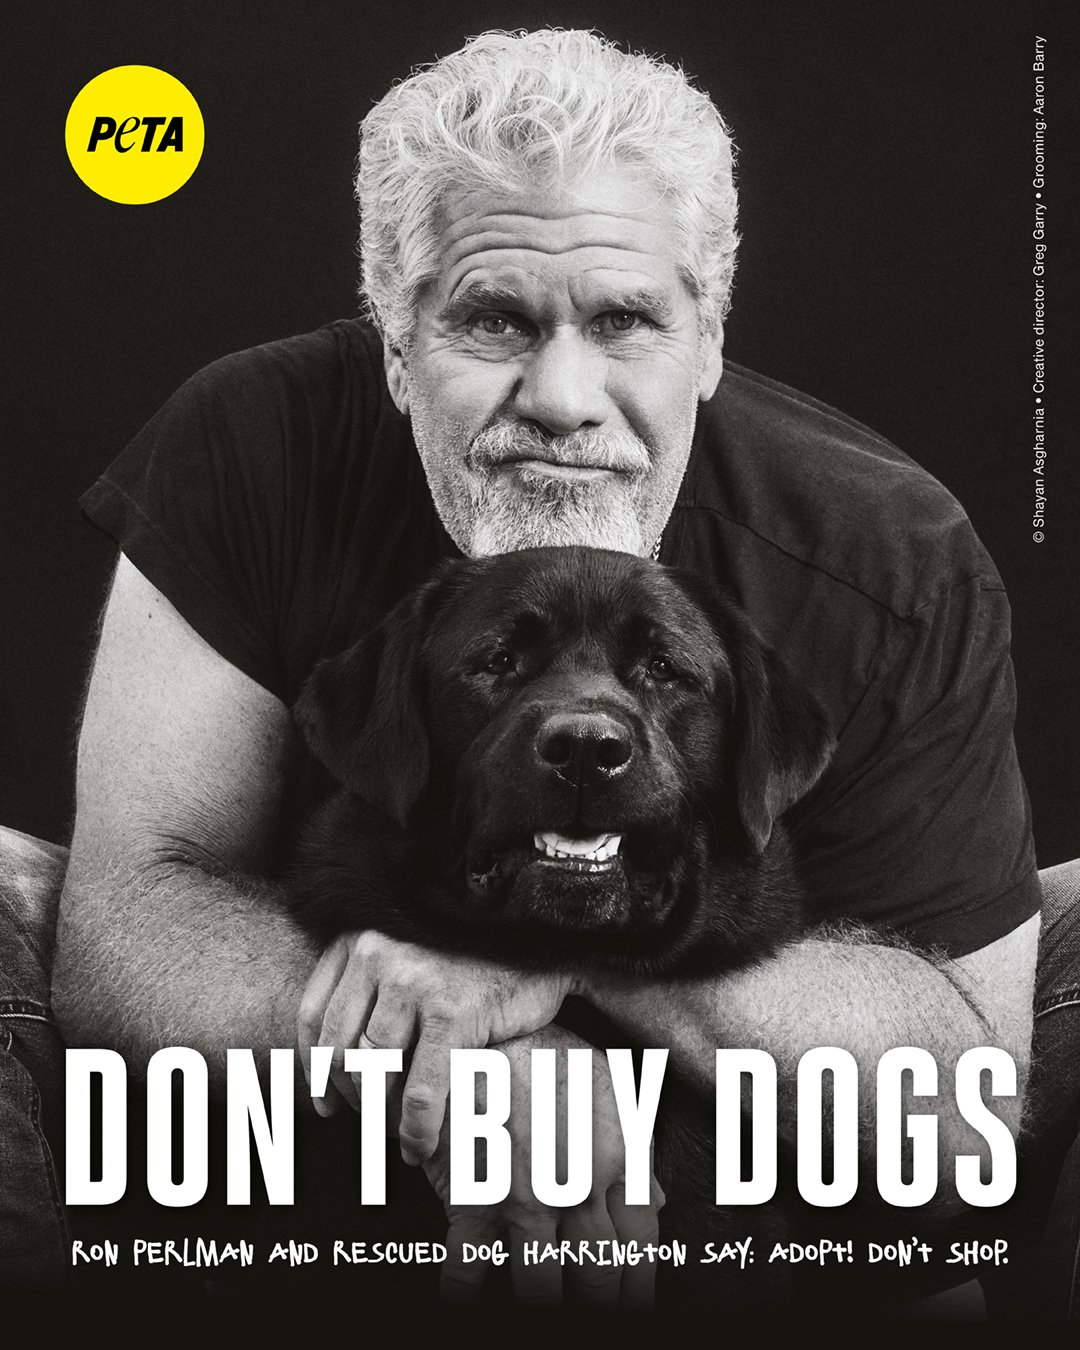 Full page ad showing Ron Perlman holding Harrington, a large black dog